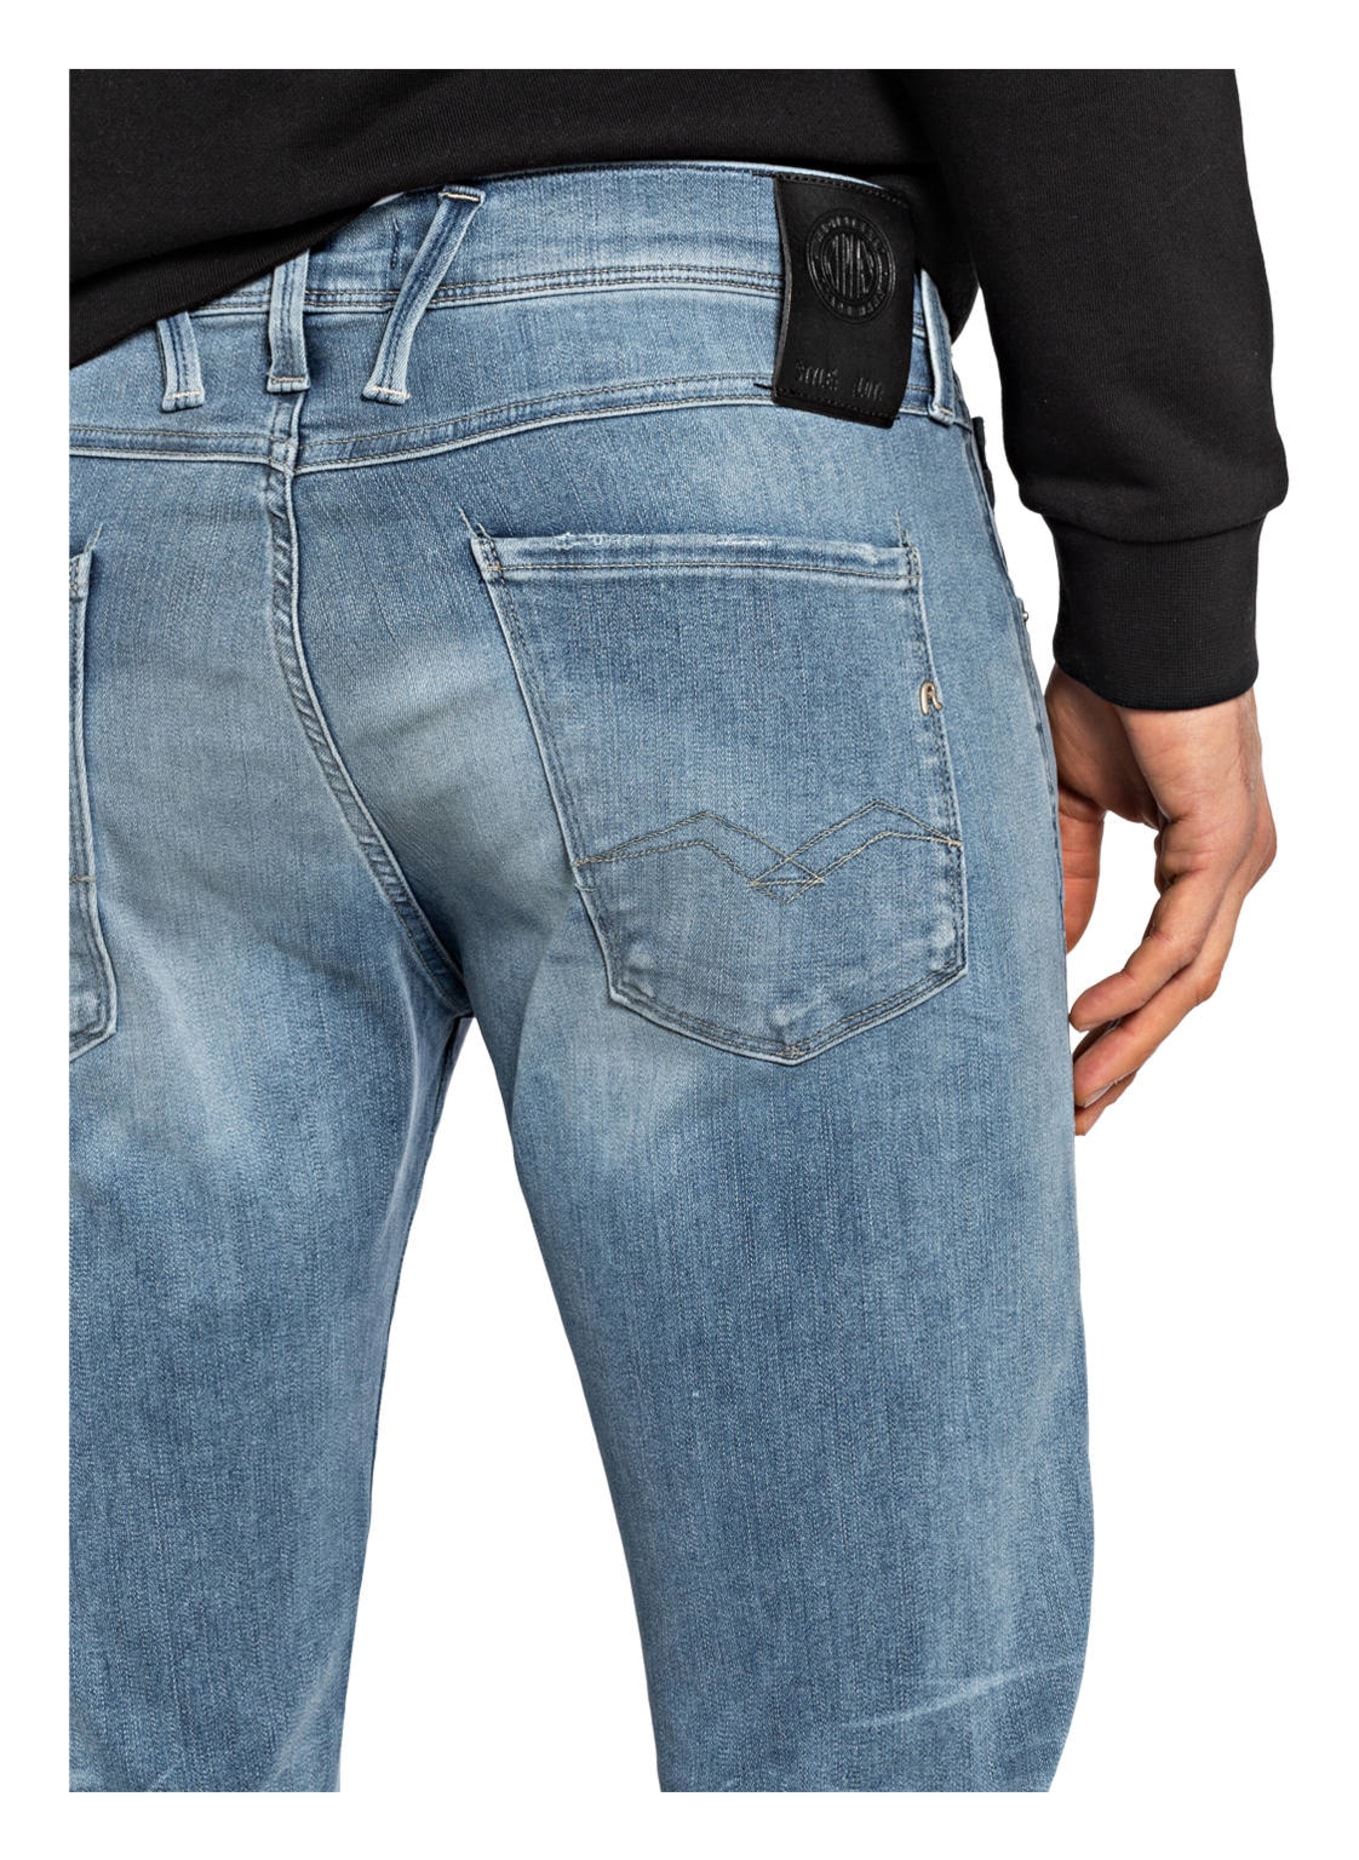 REPLAY Jeans ANBASS Slim Fit, Farbe: 009 MEDIUM BLUE (Bild 5)